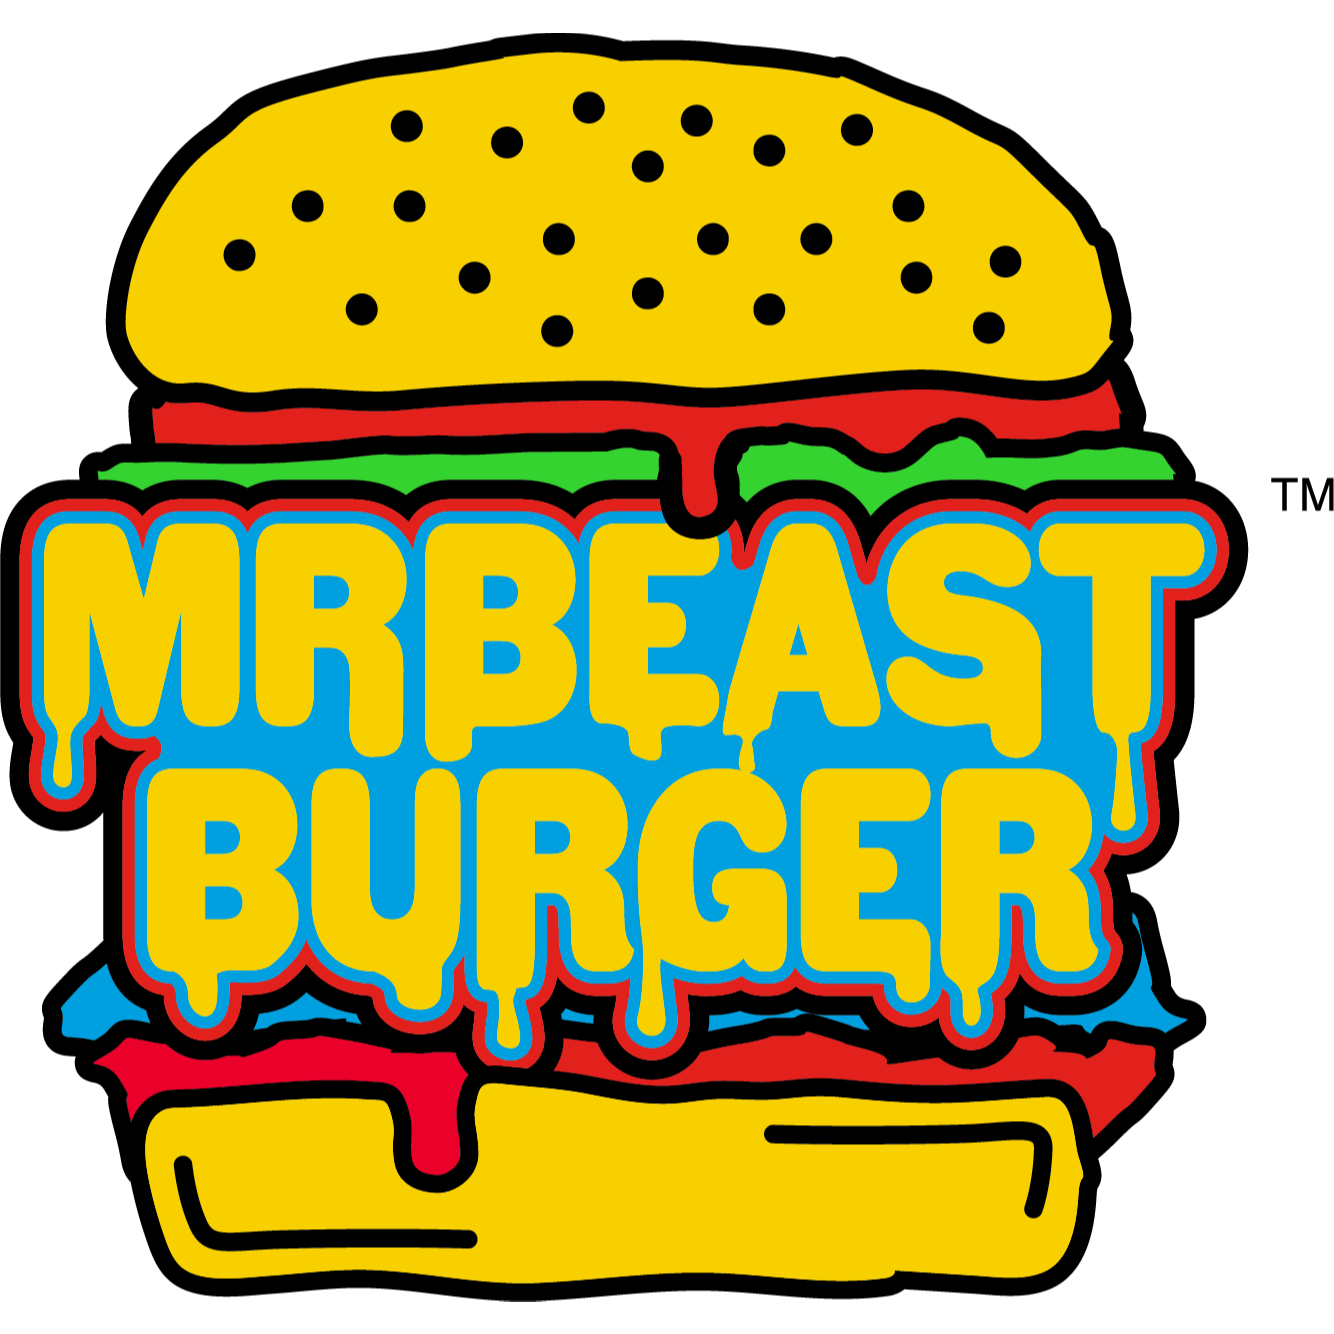 Mr. Beast Burger Restaurant.